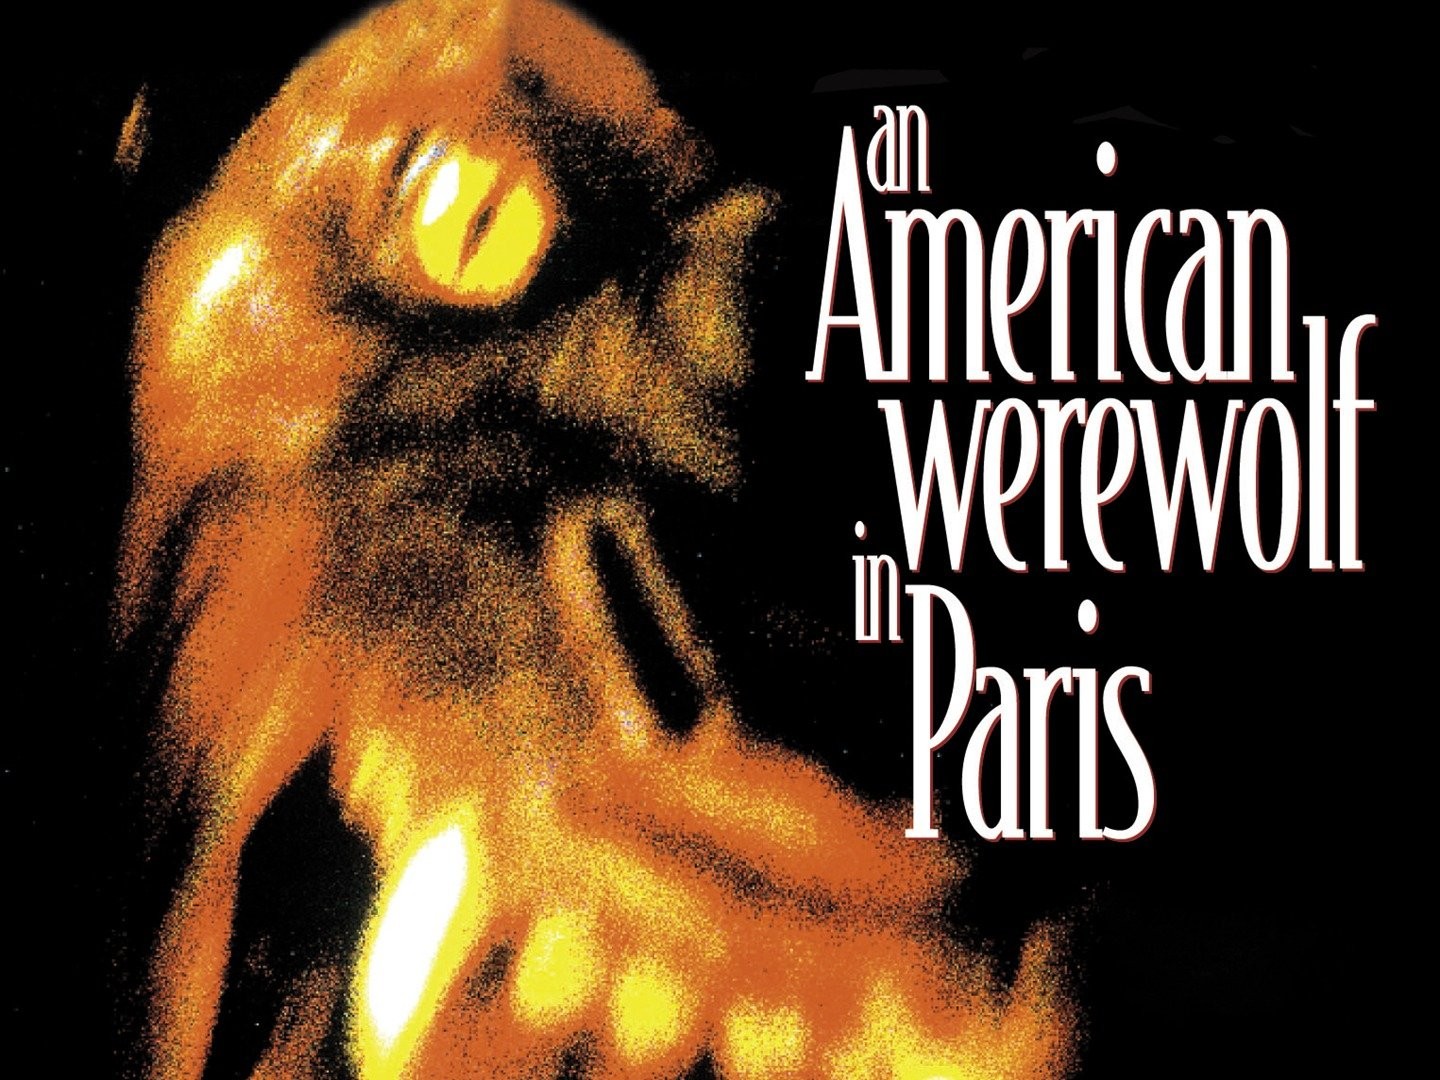 An American Werewolf in Paris - Wikipedia